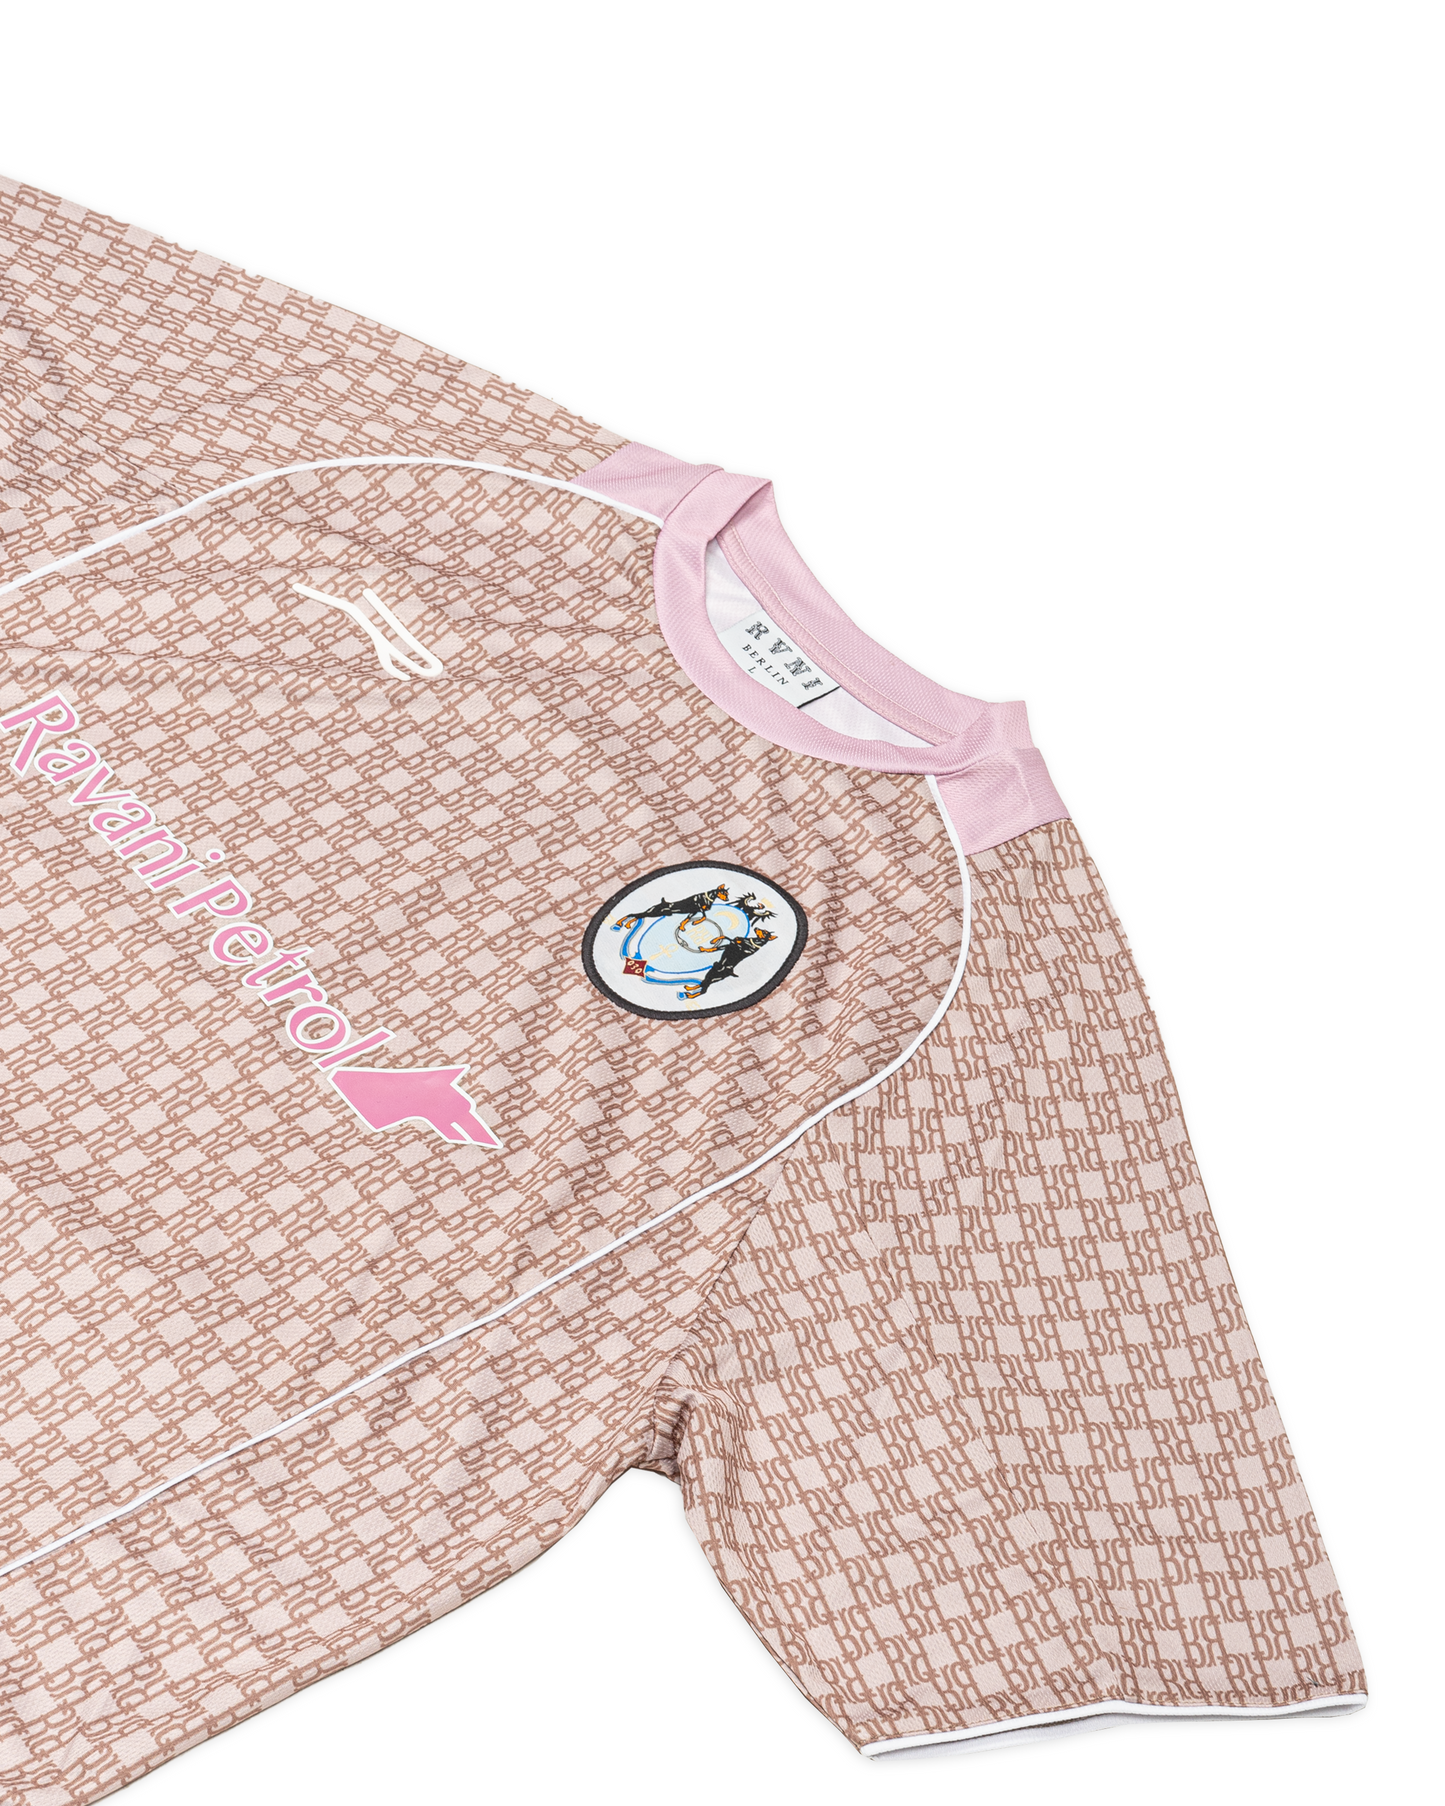 FC RAVANI 6 Years Monogram Jersey Beige Baby Pink